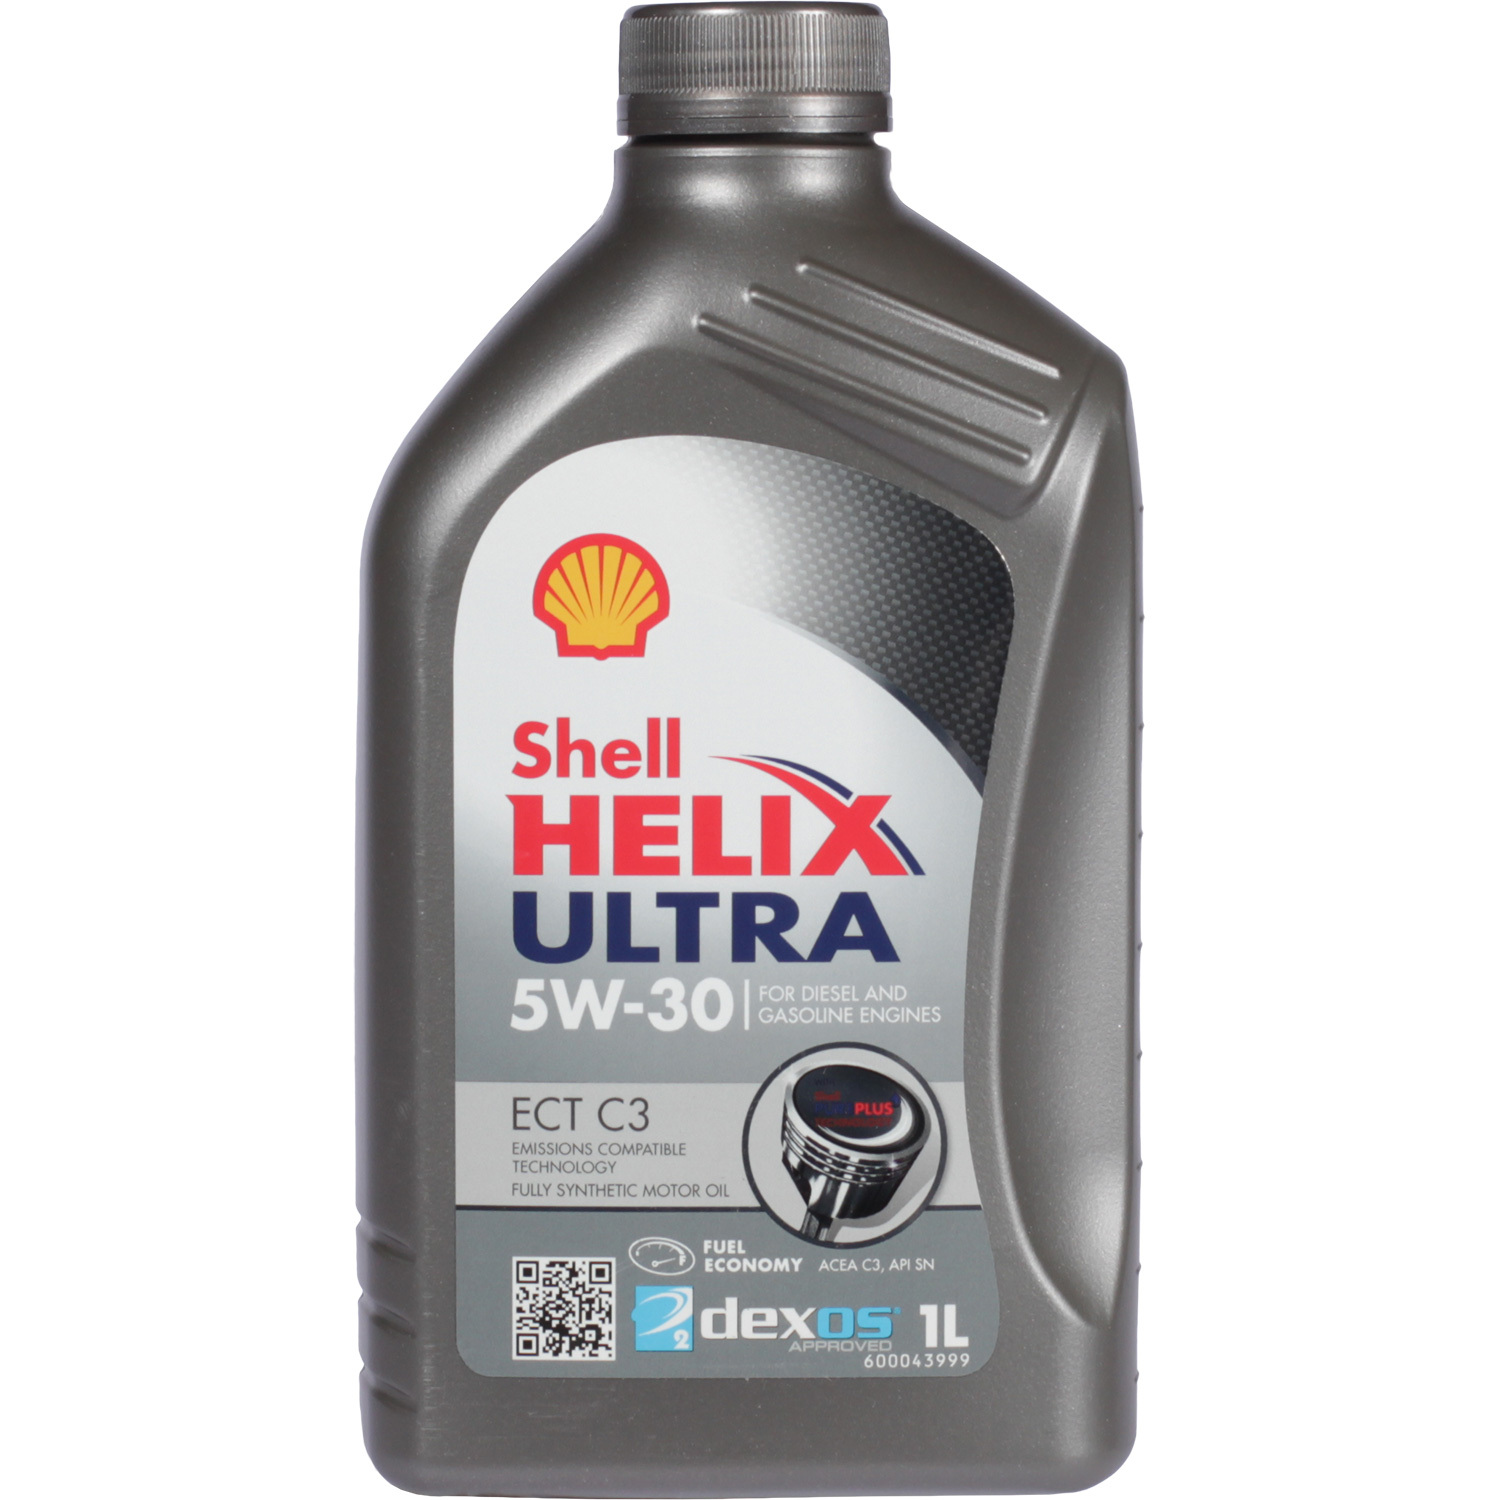 Shell Моторное масло Shell Helix Ultra ECT С3 5W-30, 1 л моторное масло shell helix hx8 ect 5w 30 4 л синтетическое